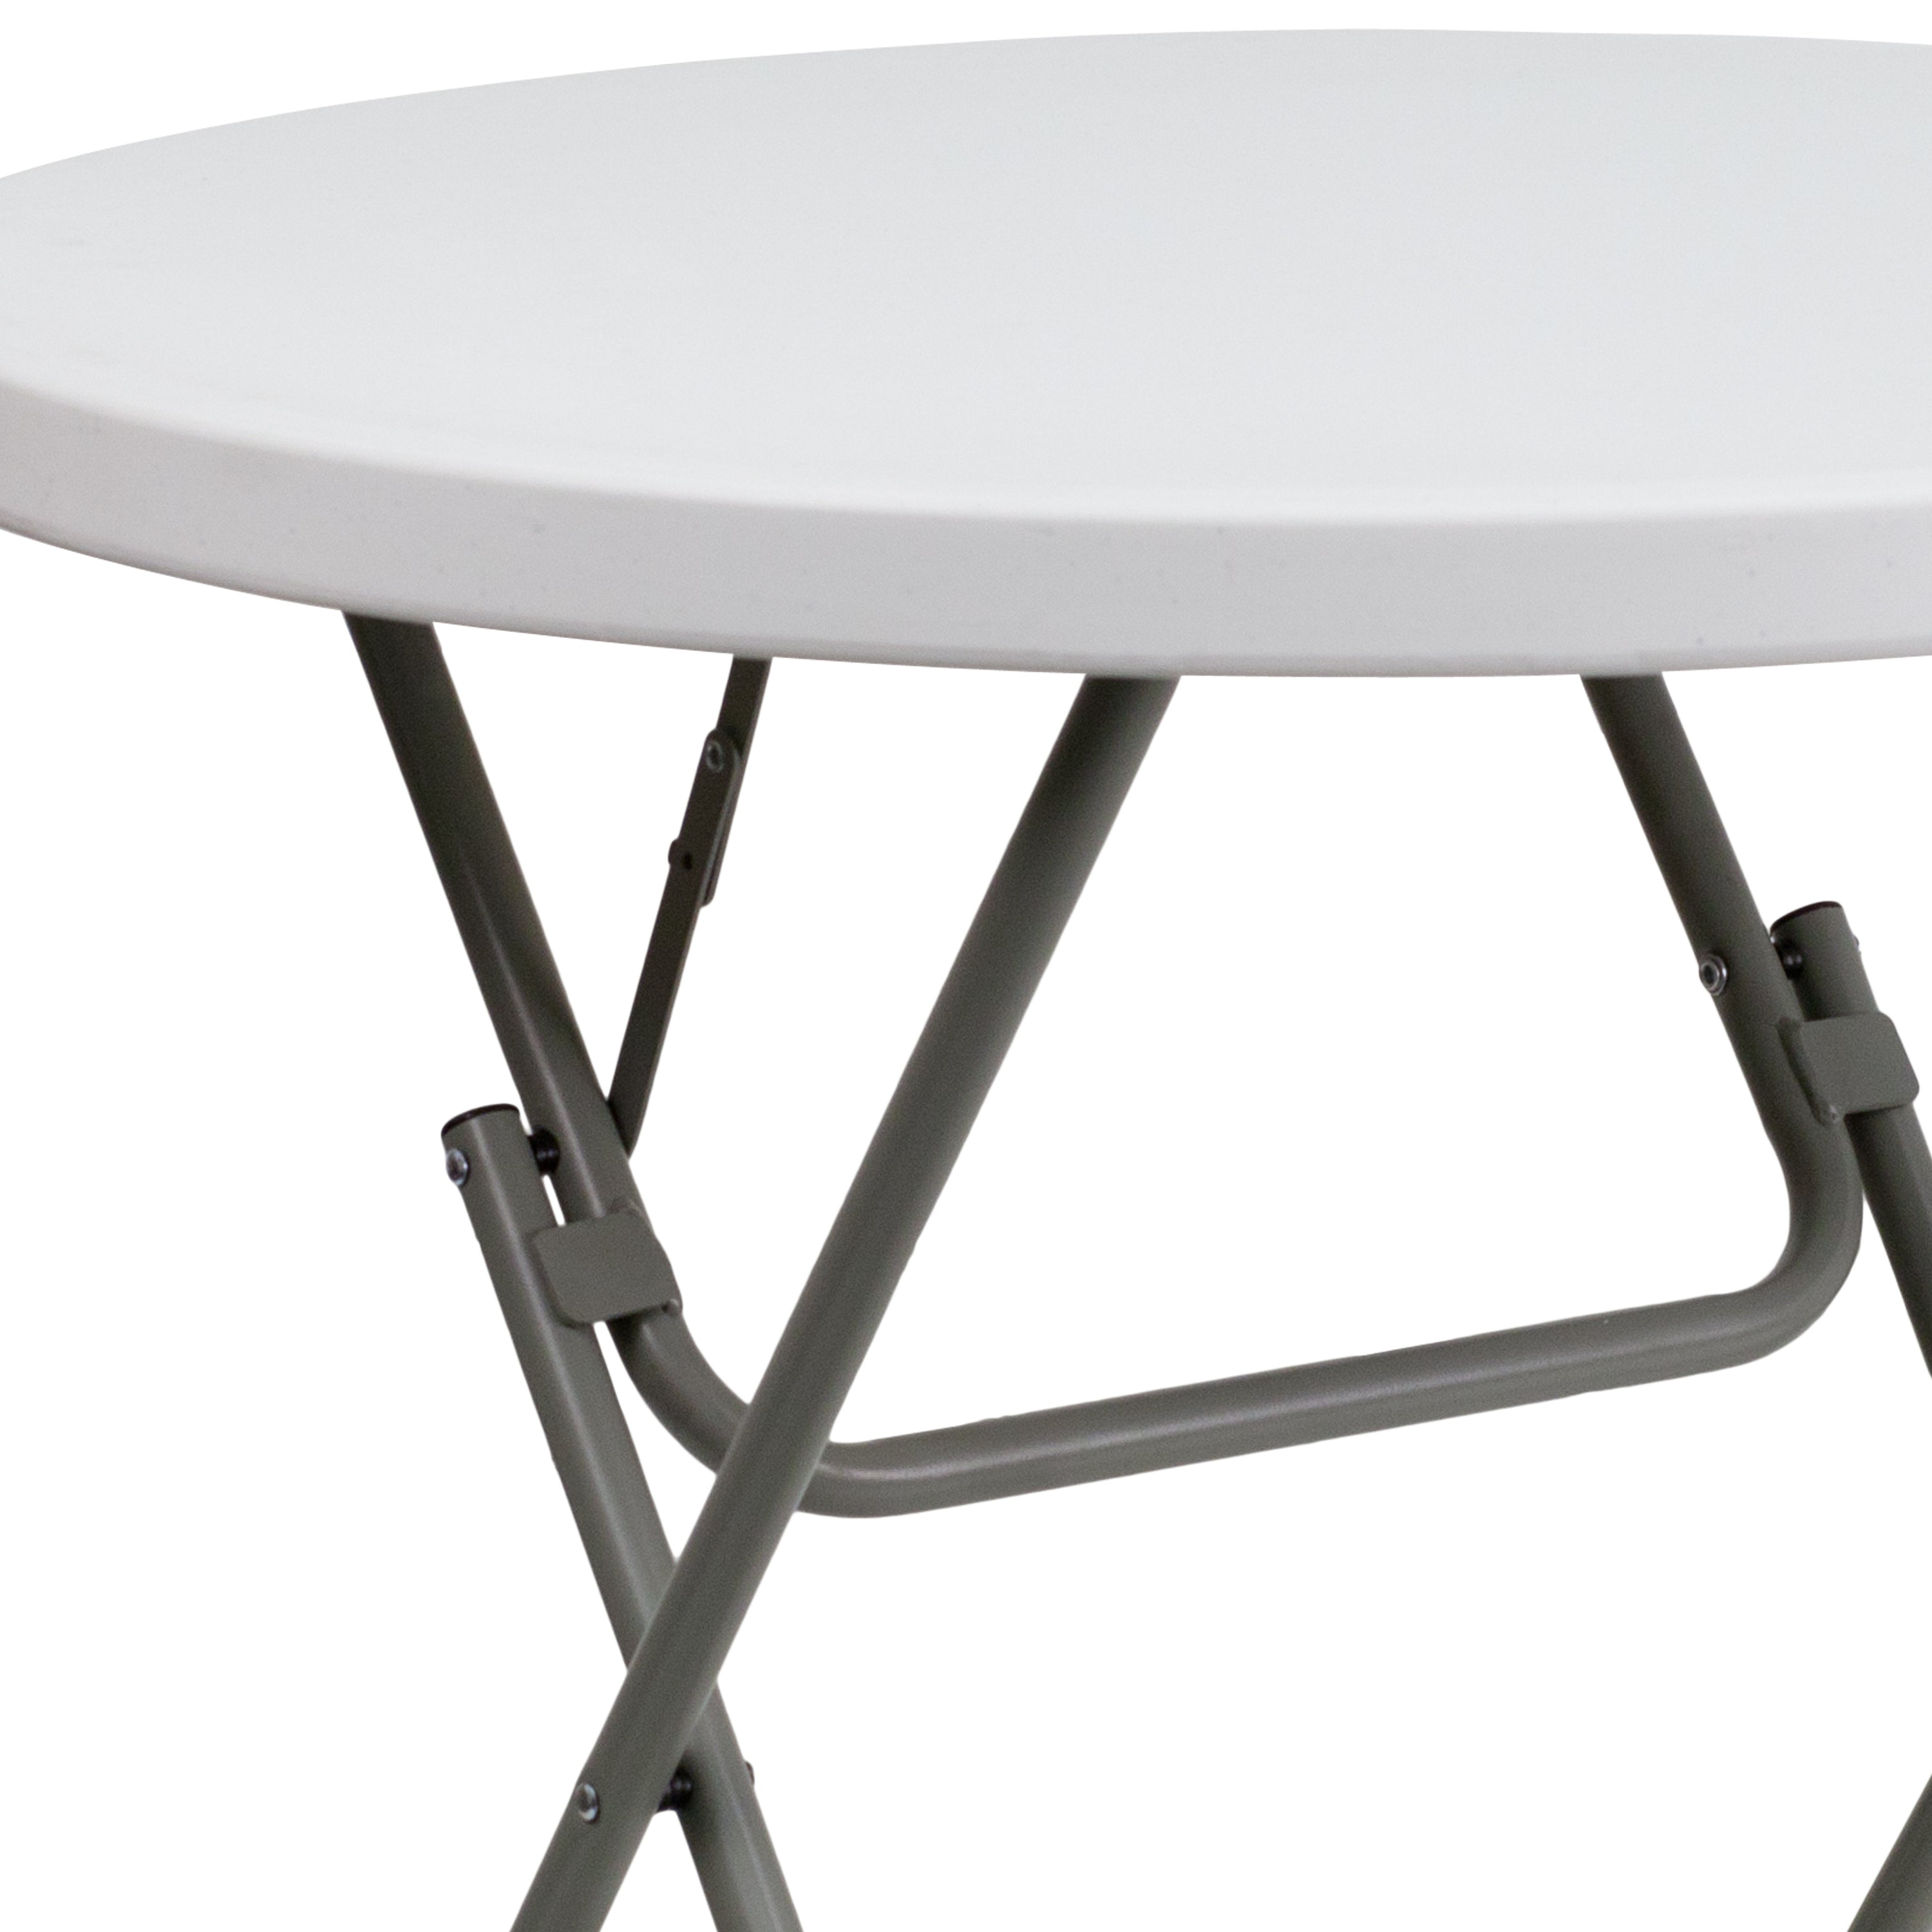 2.63-Foot Round Plastic Folding Table-Round Plastic Folding Table-Flash Furniture-Wall2Wall Furnishings